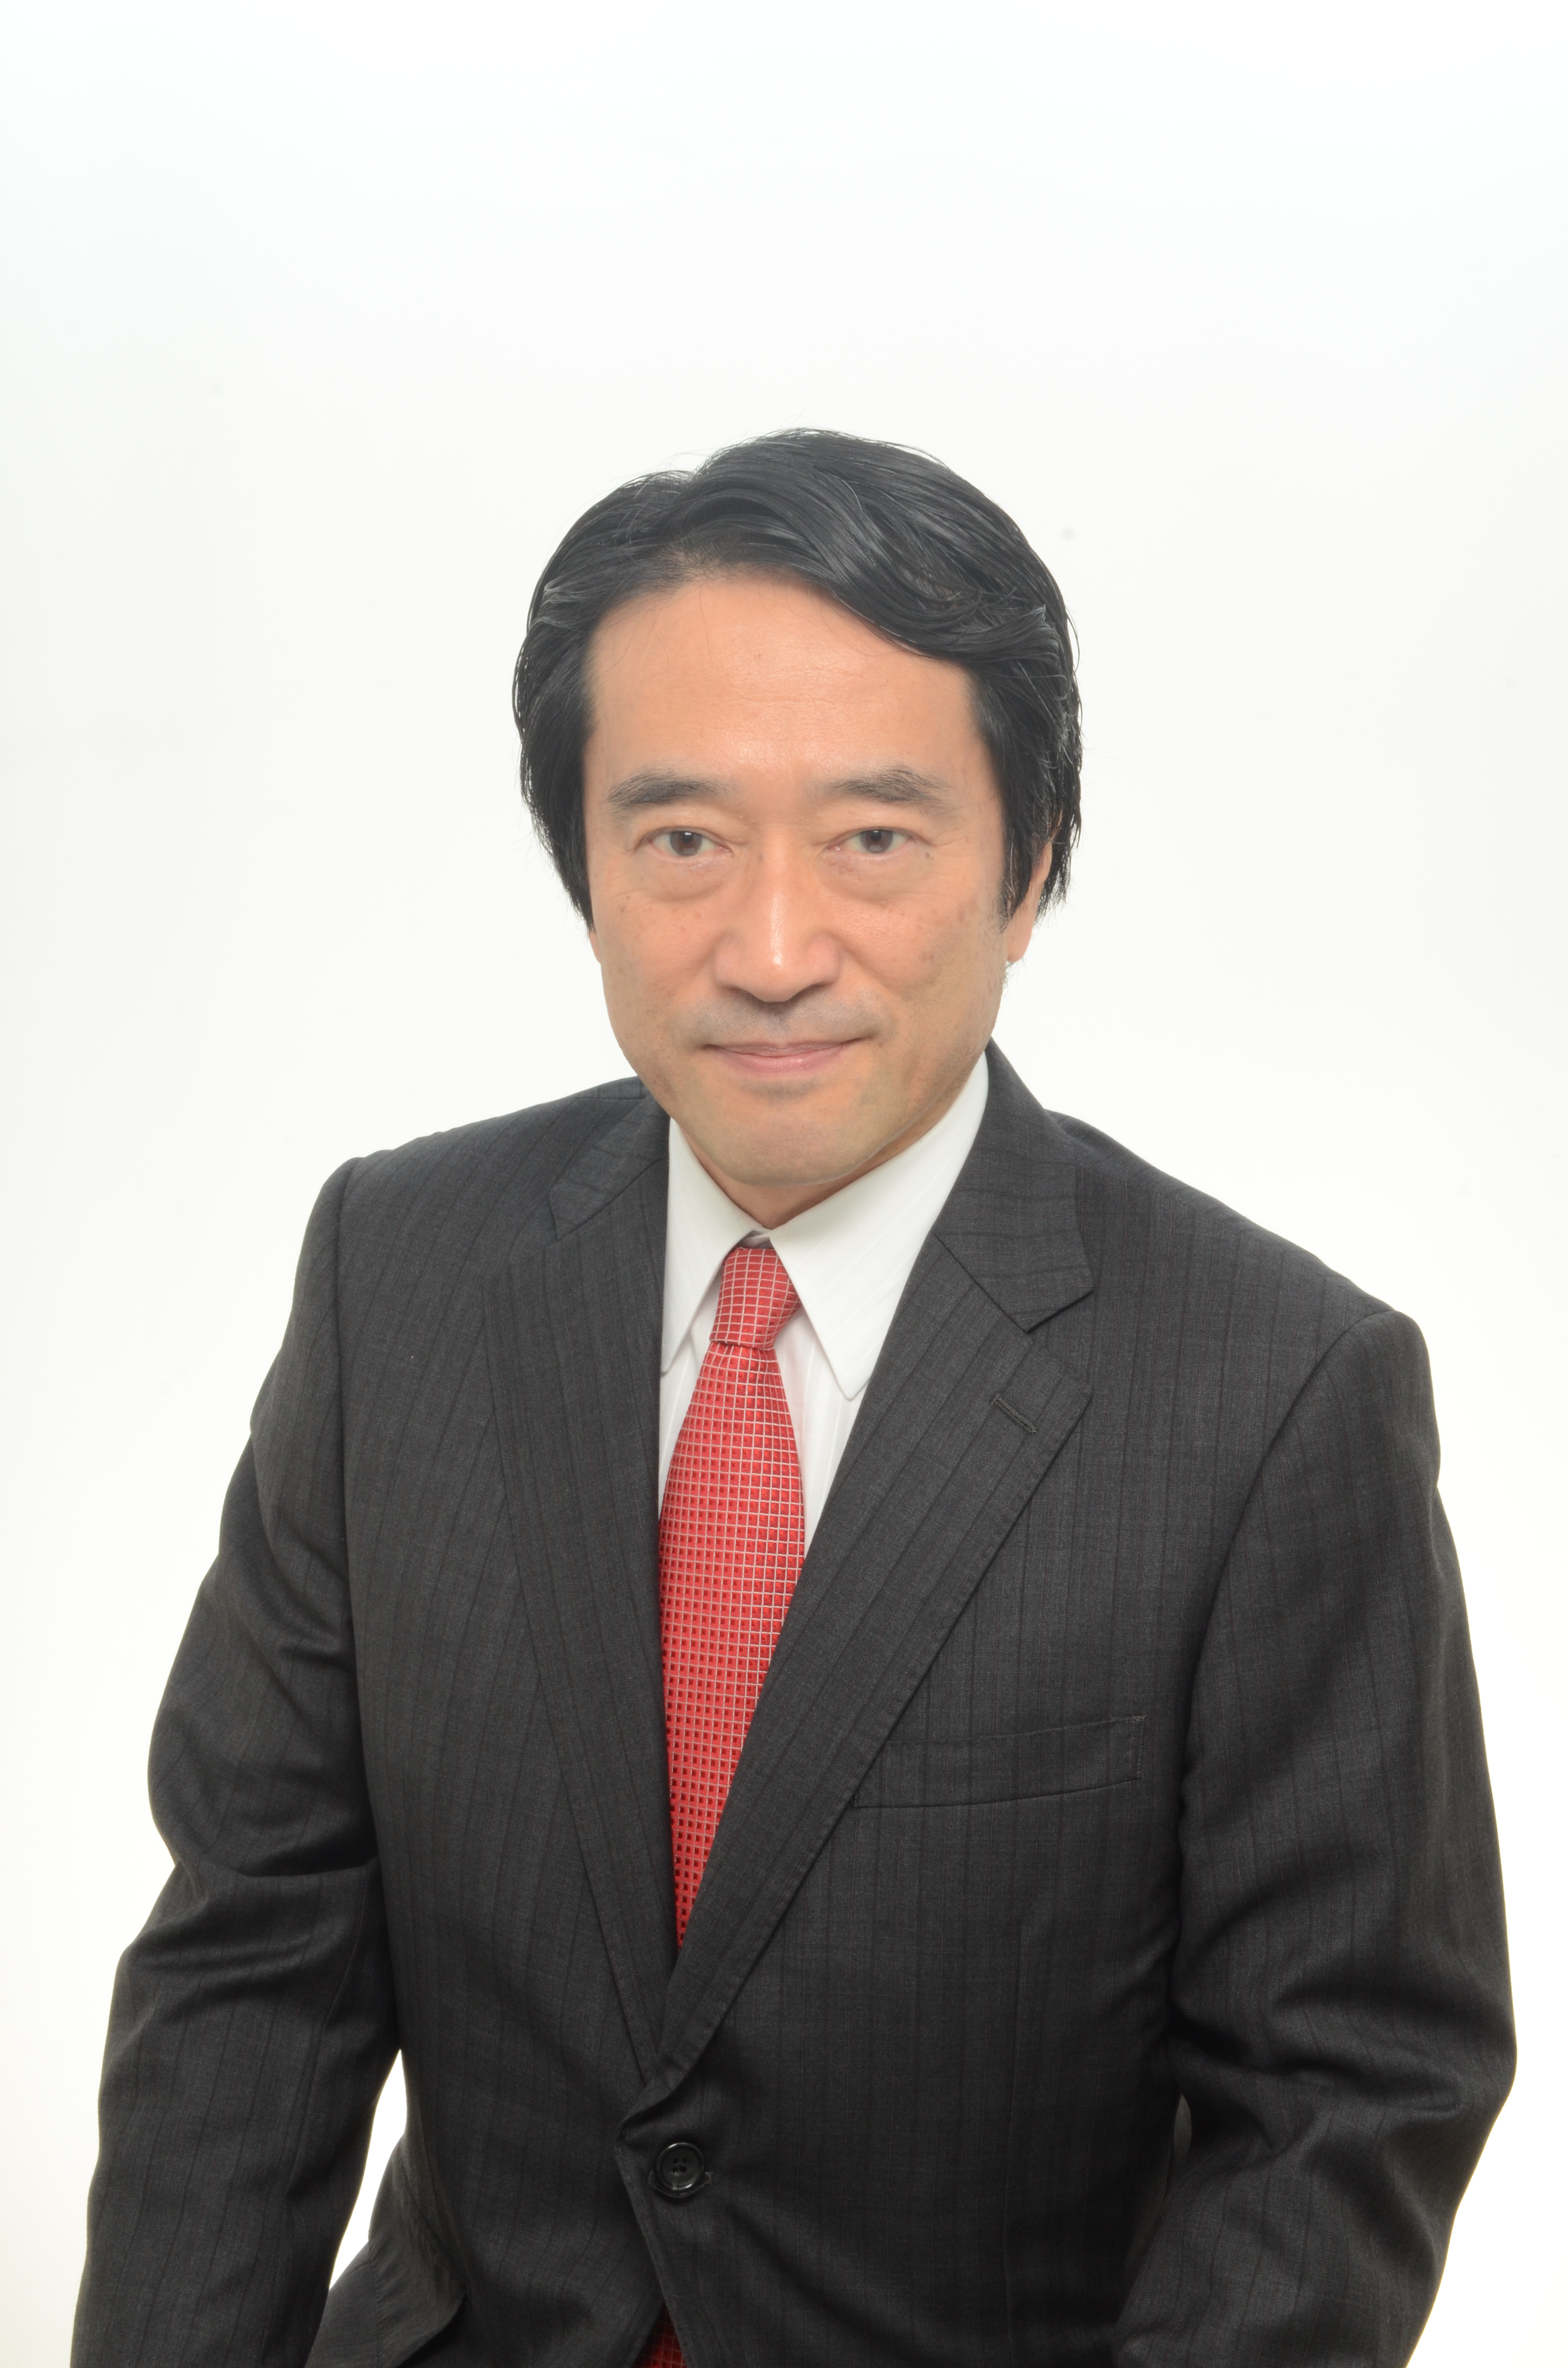 Japanese government spokesman to speak on BGF – G7 Summit Initiative topics